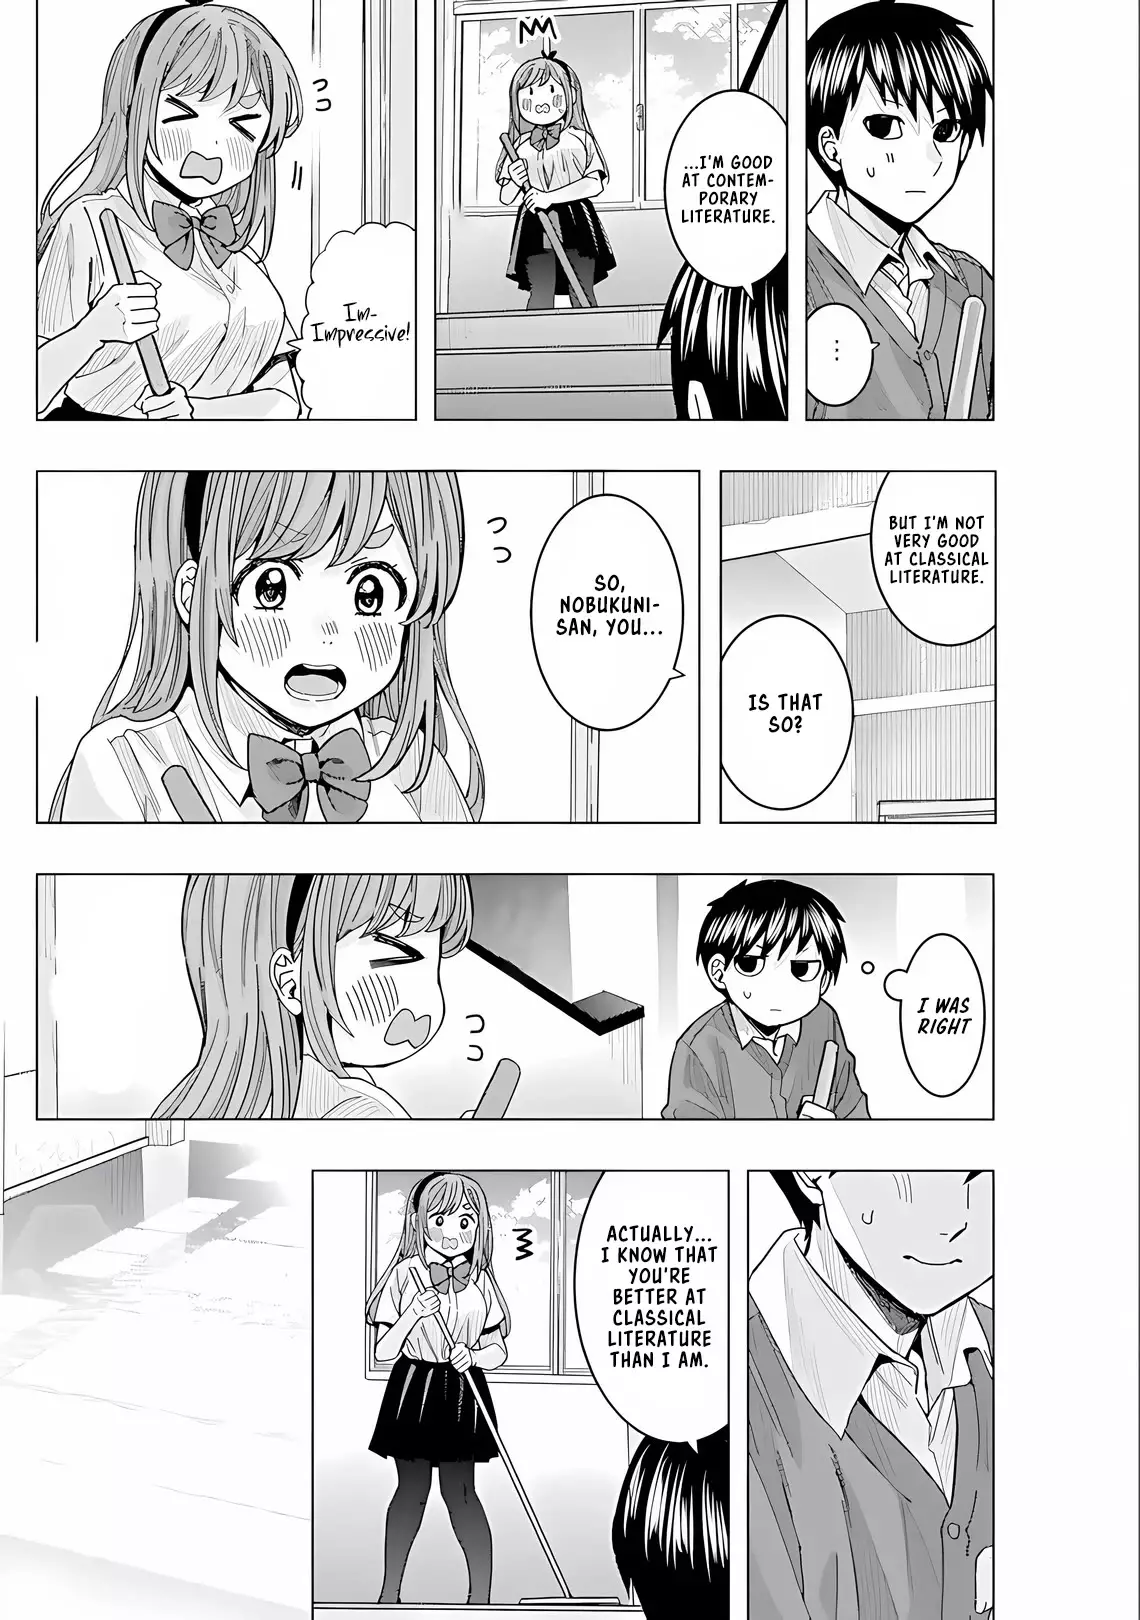 "nobukuni-San" Does She Like Me? - 27 page 9-4370e038